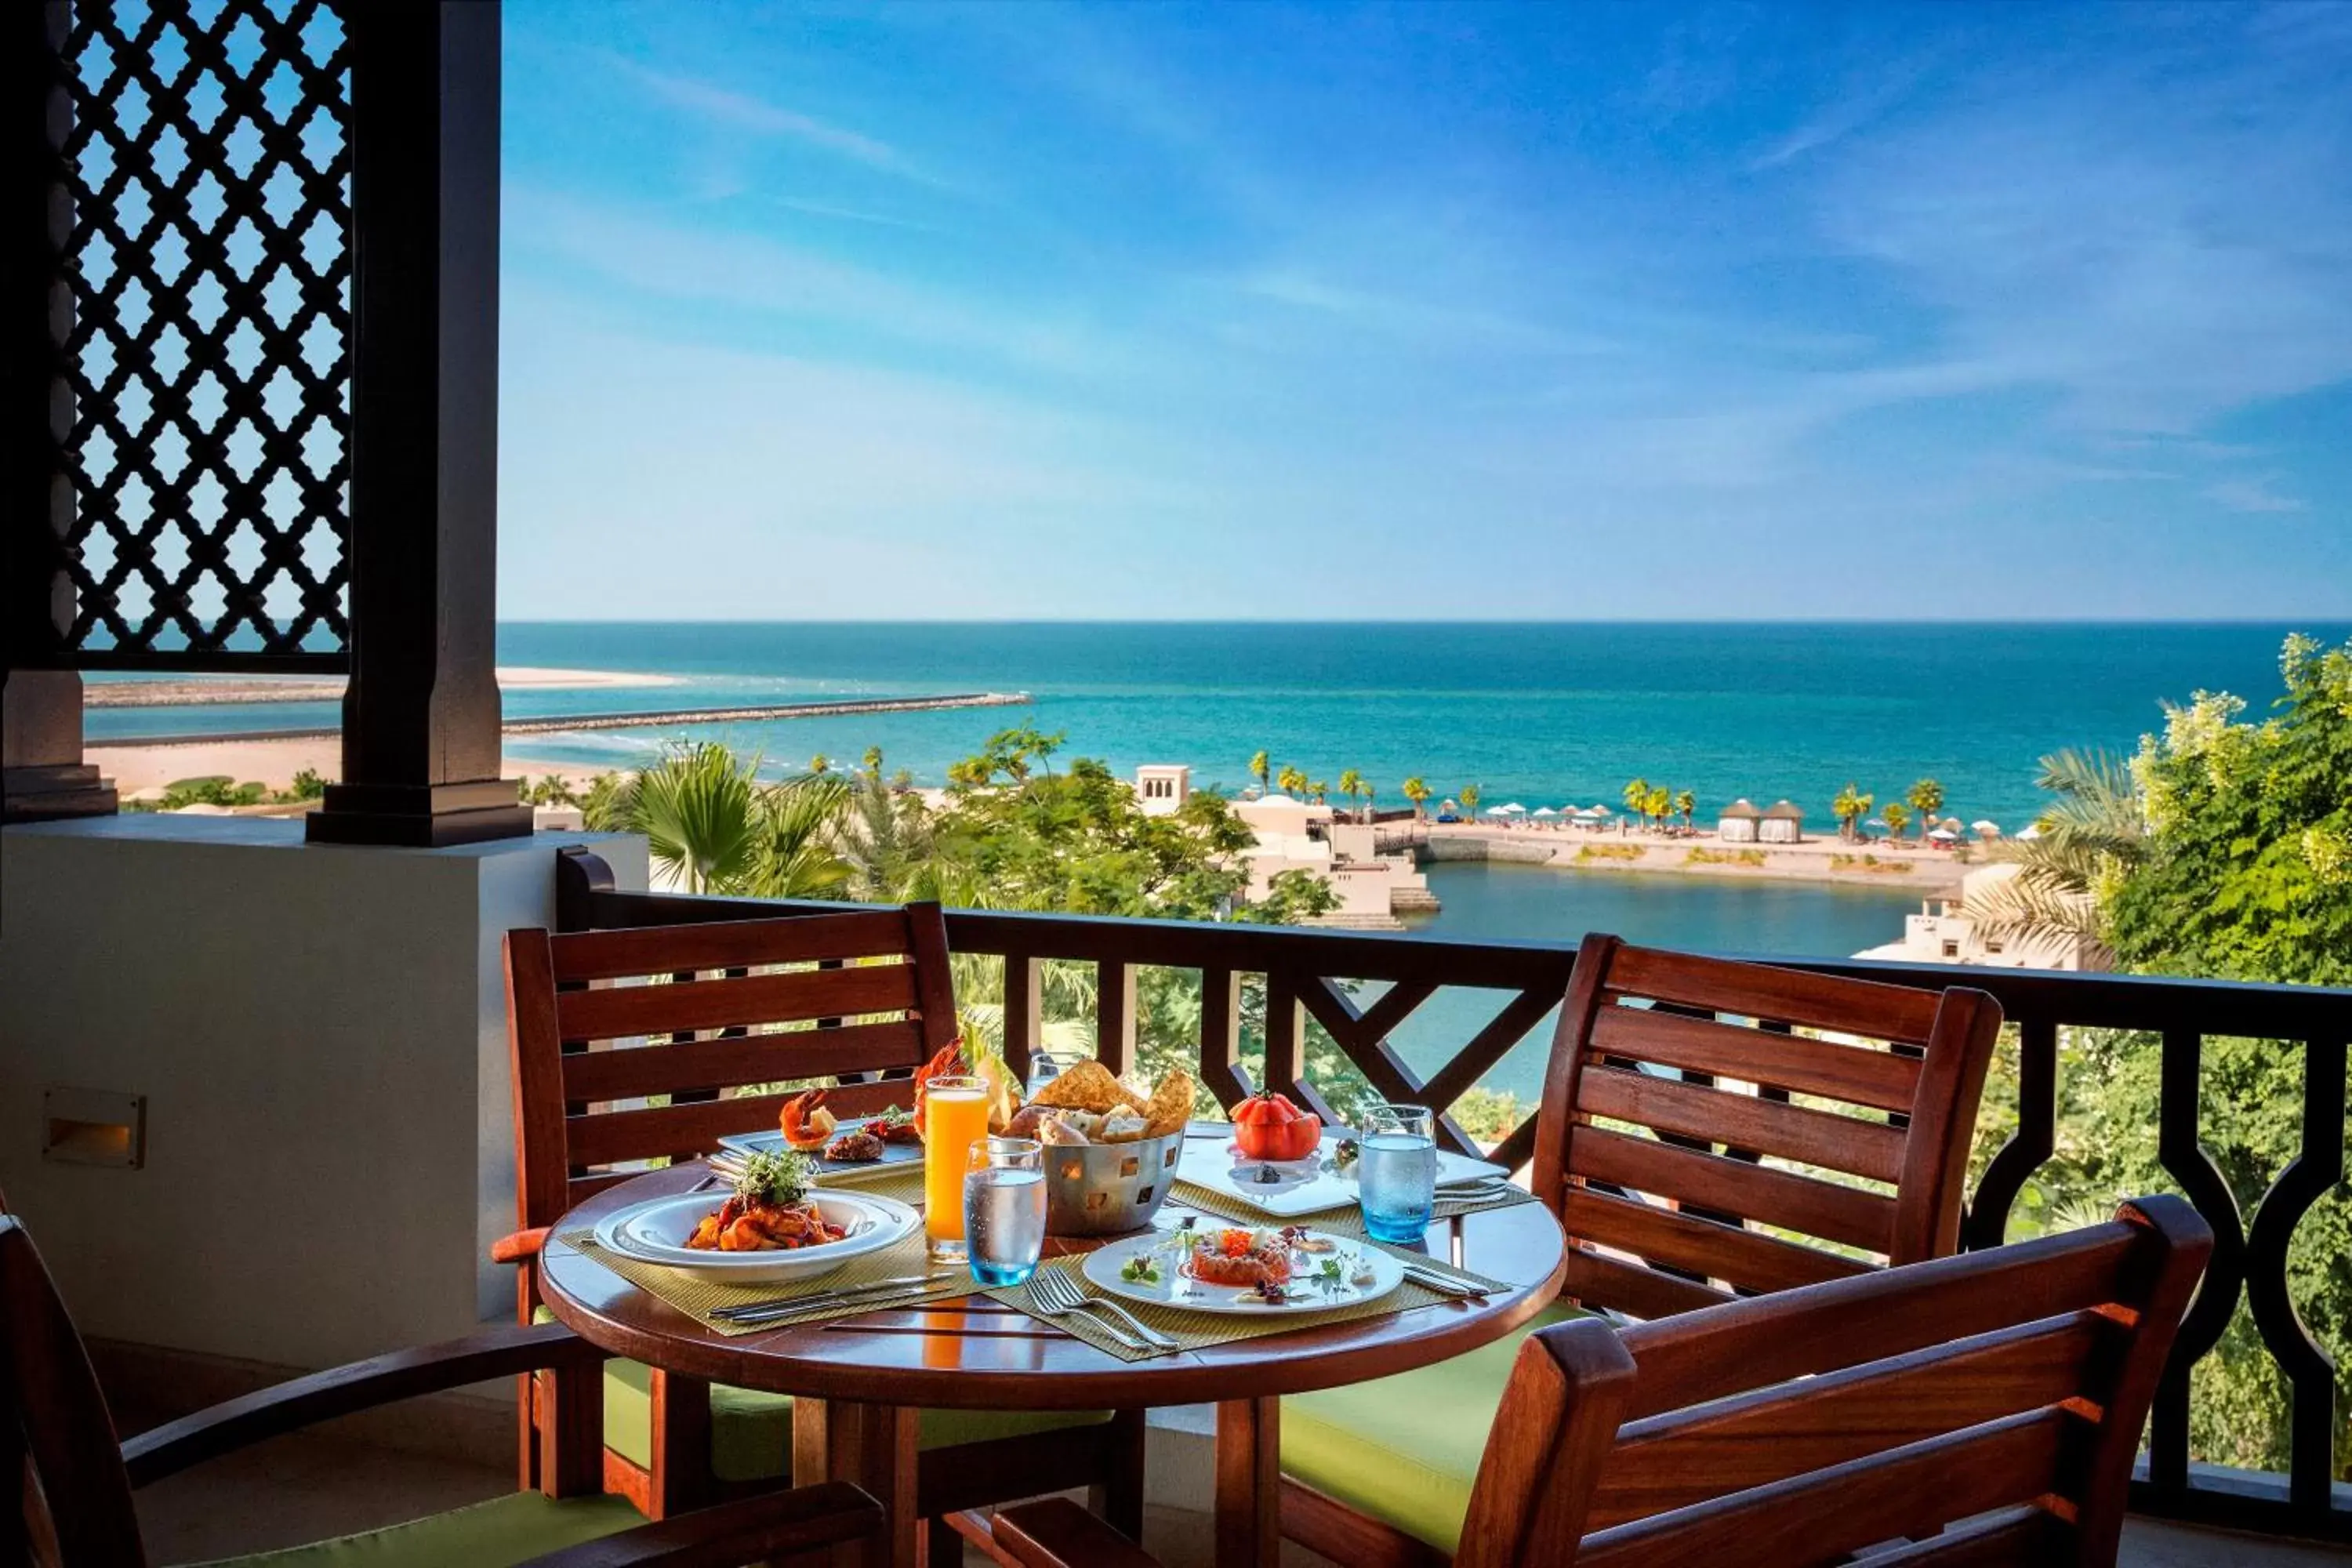 Restaurant/places to eat in The Cove Rotana Resort - Ras Al Khaimah